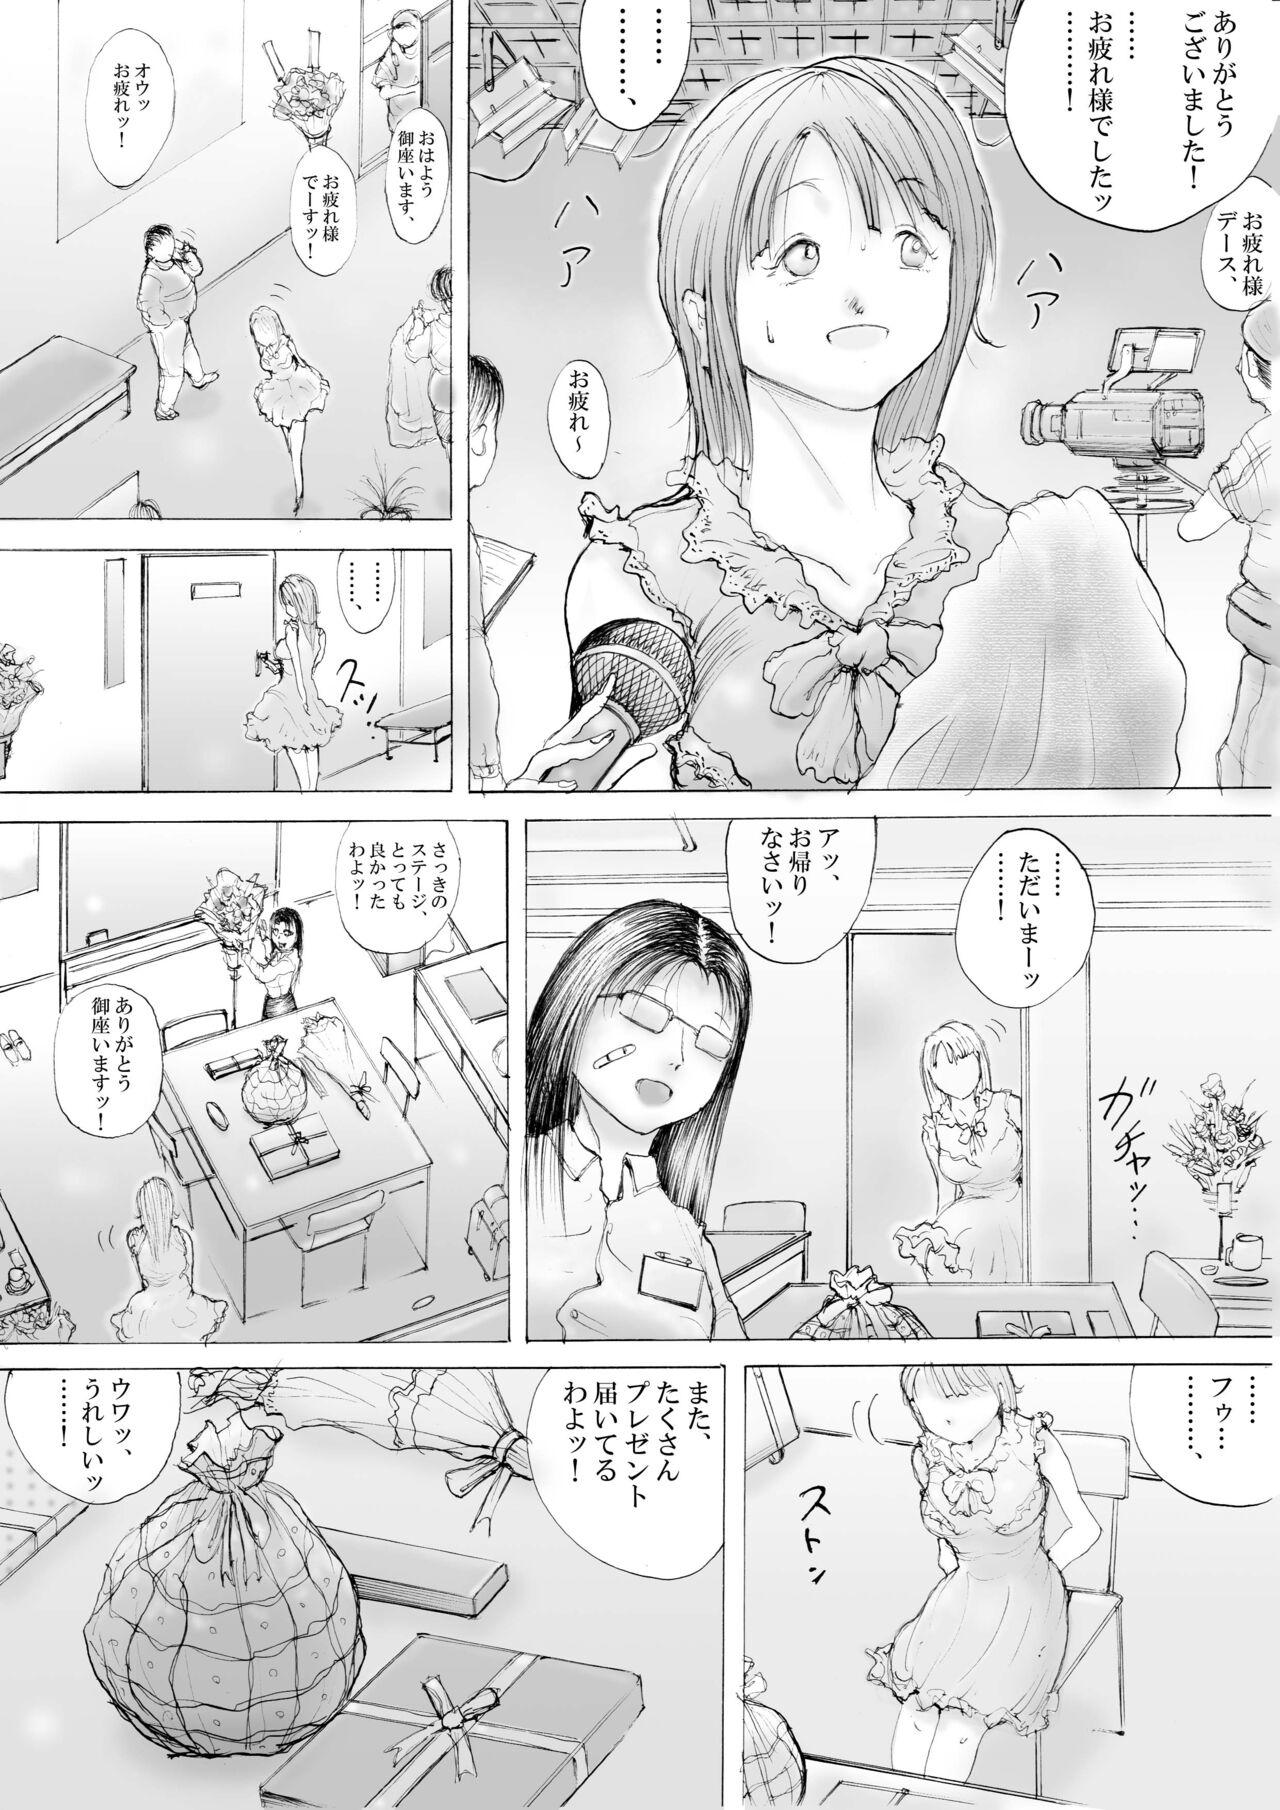 Horror Manga 10 2